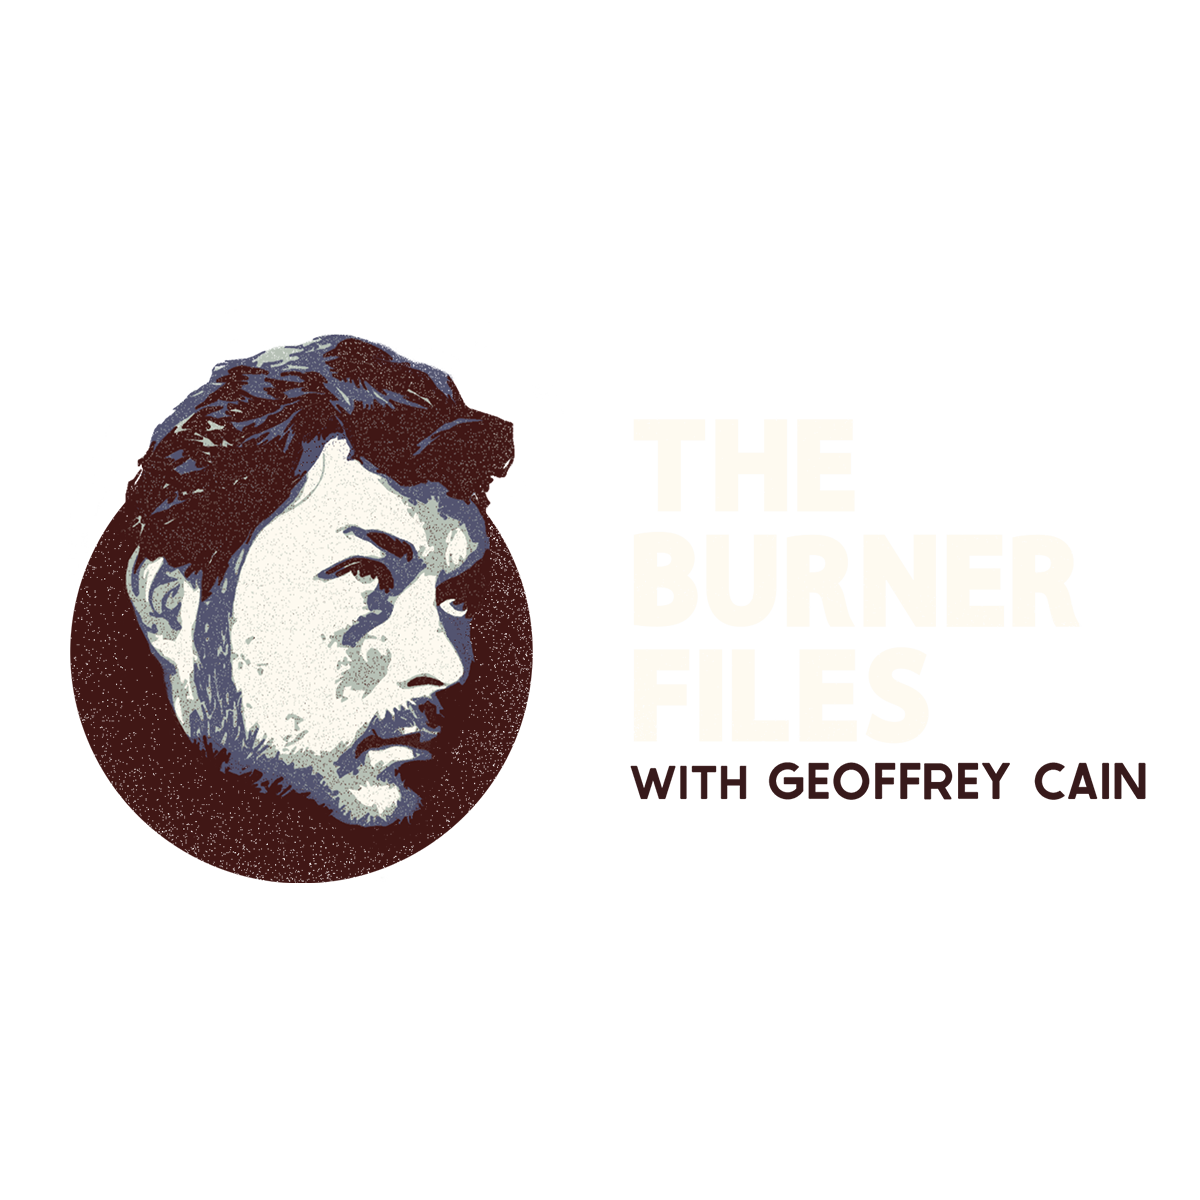 The Burner Files